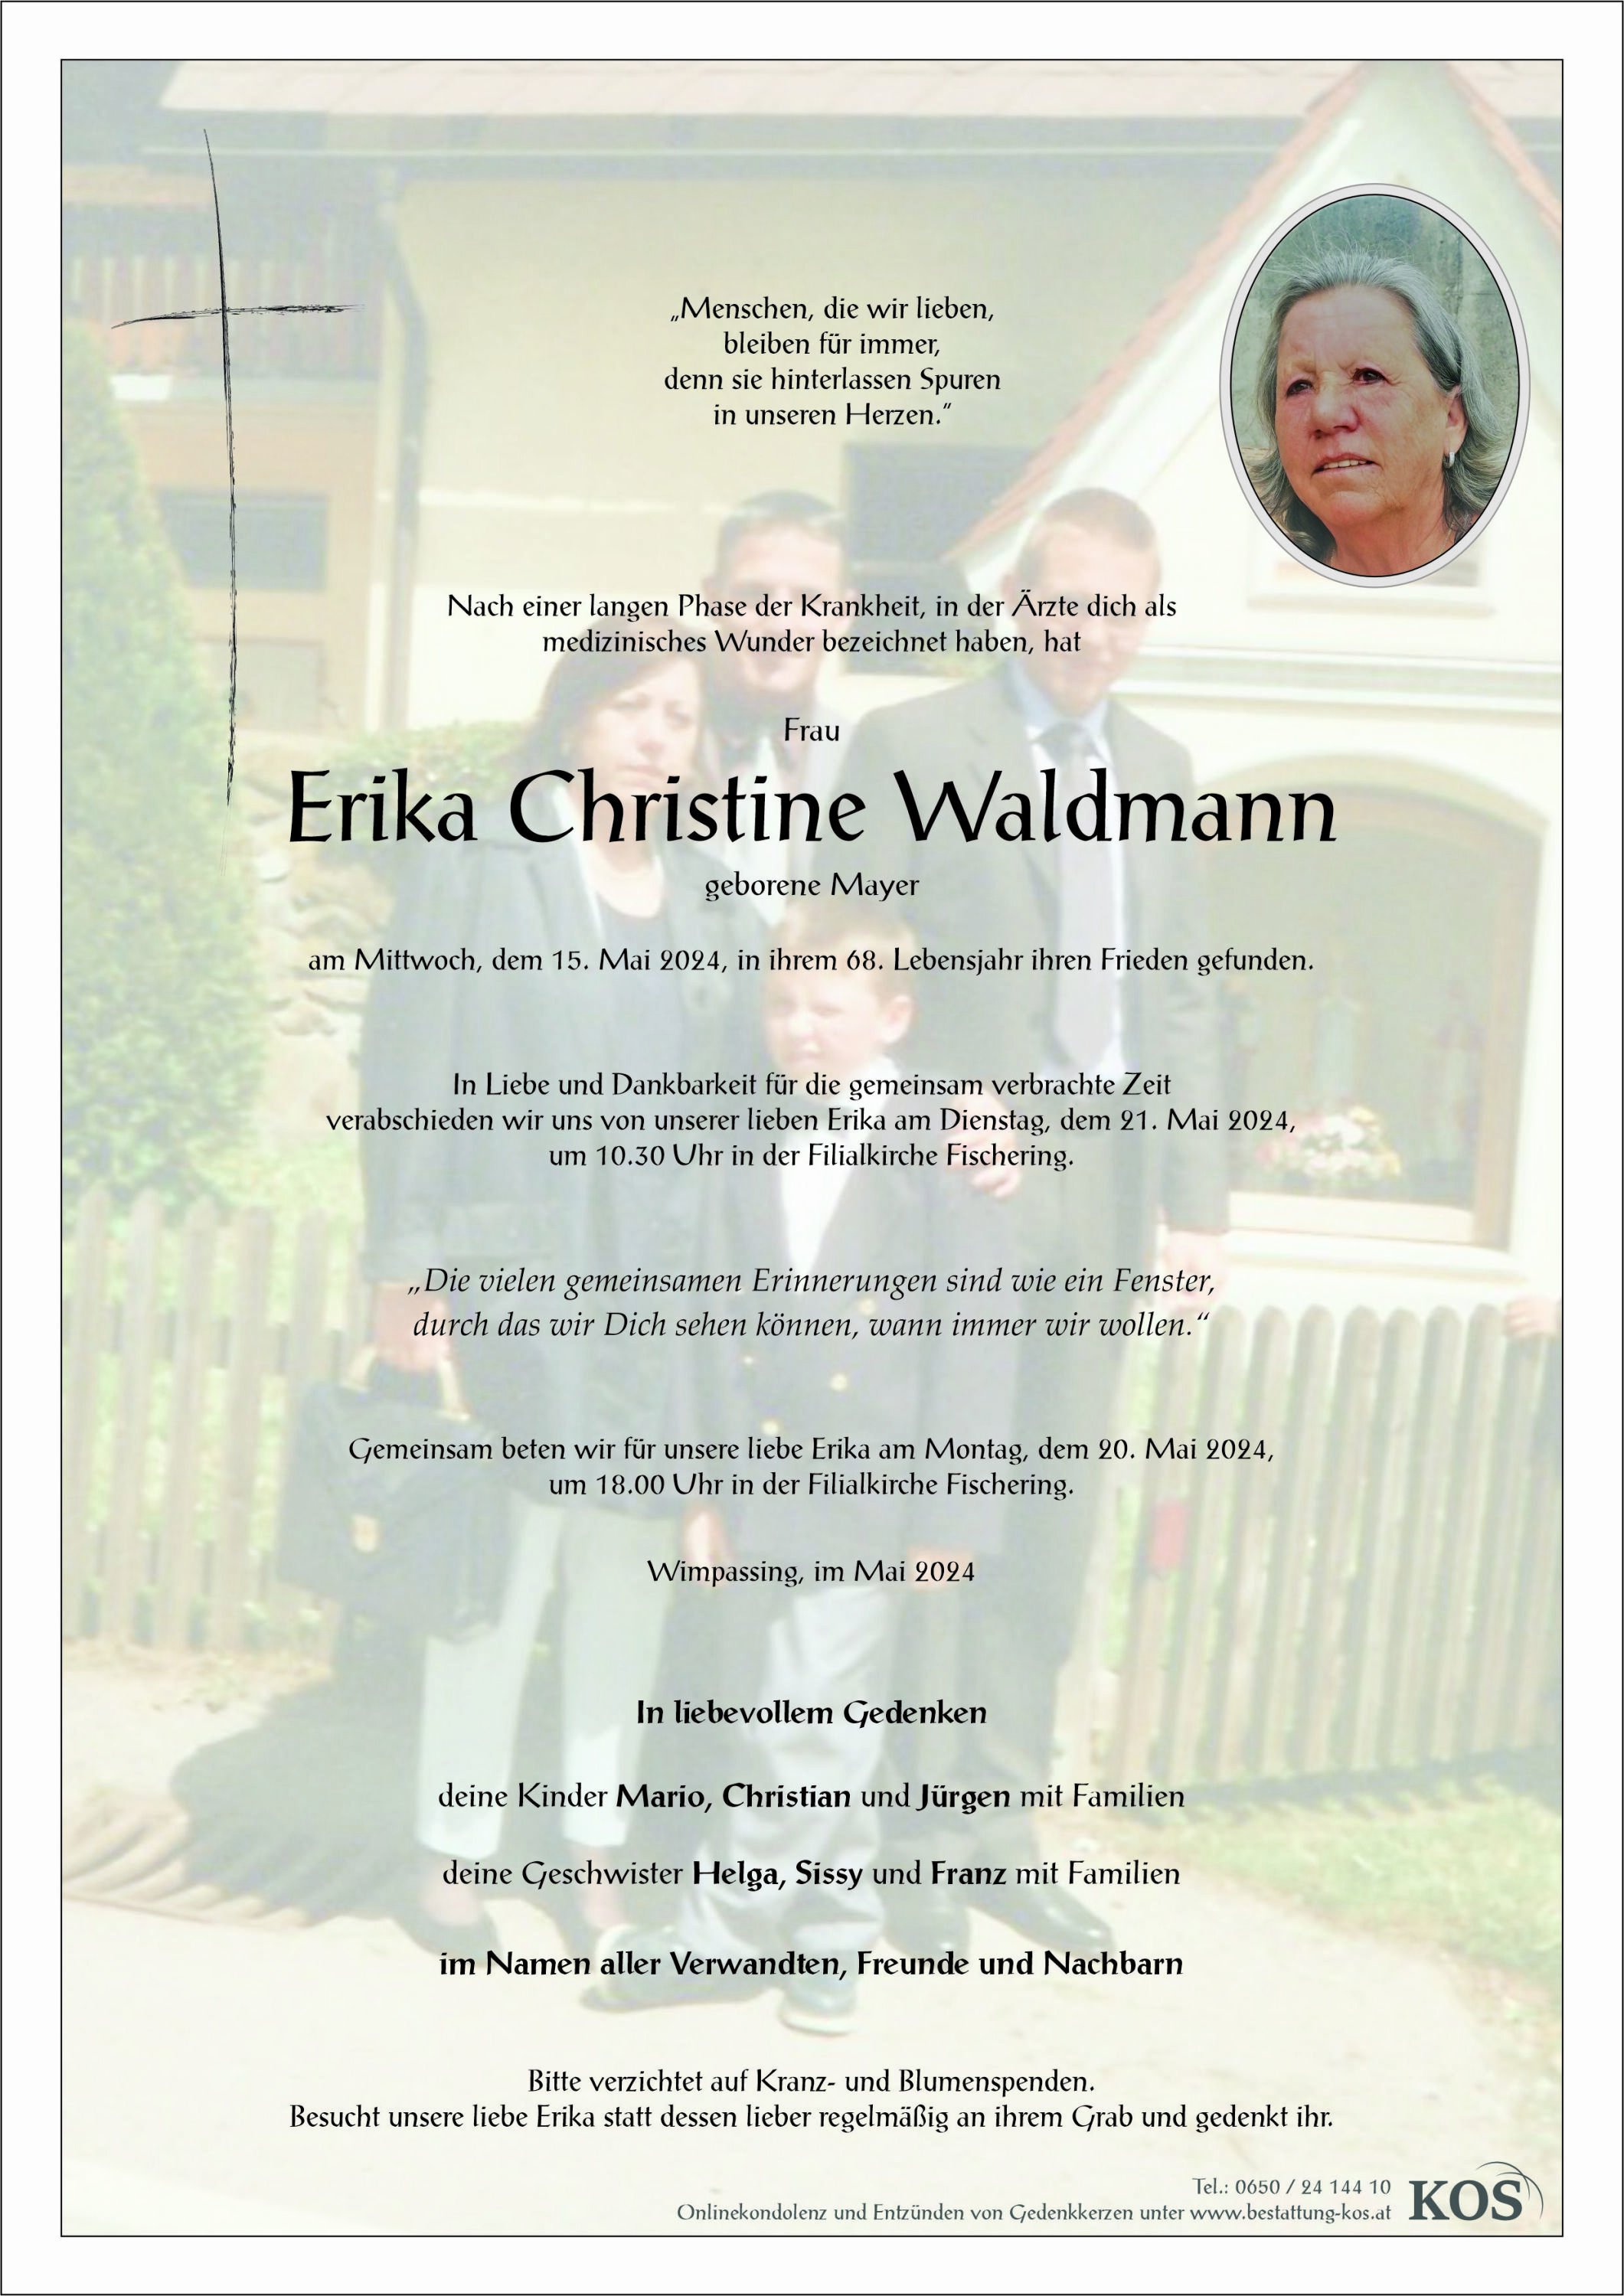 Erika Christine Waldmann